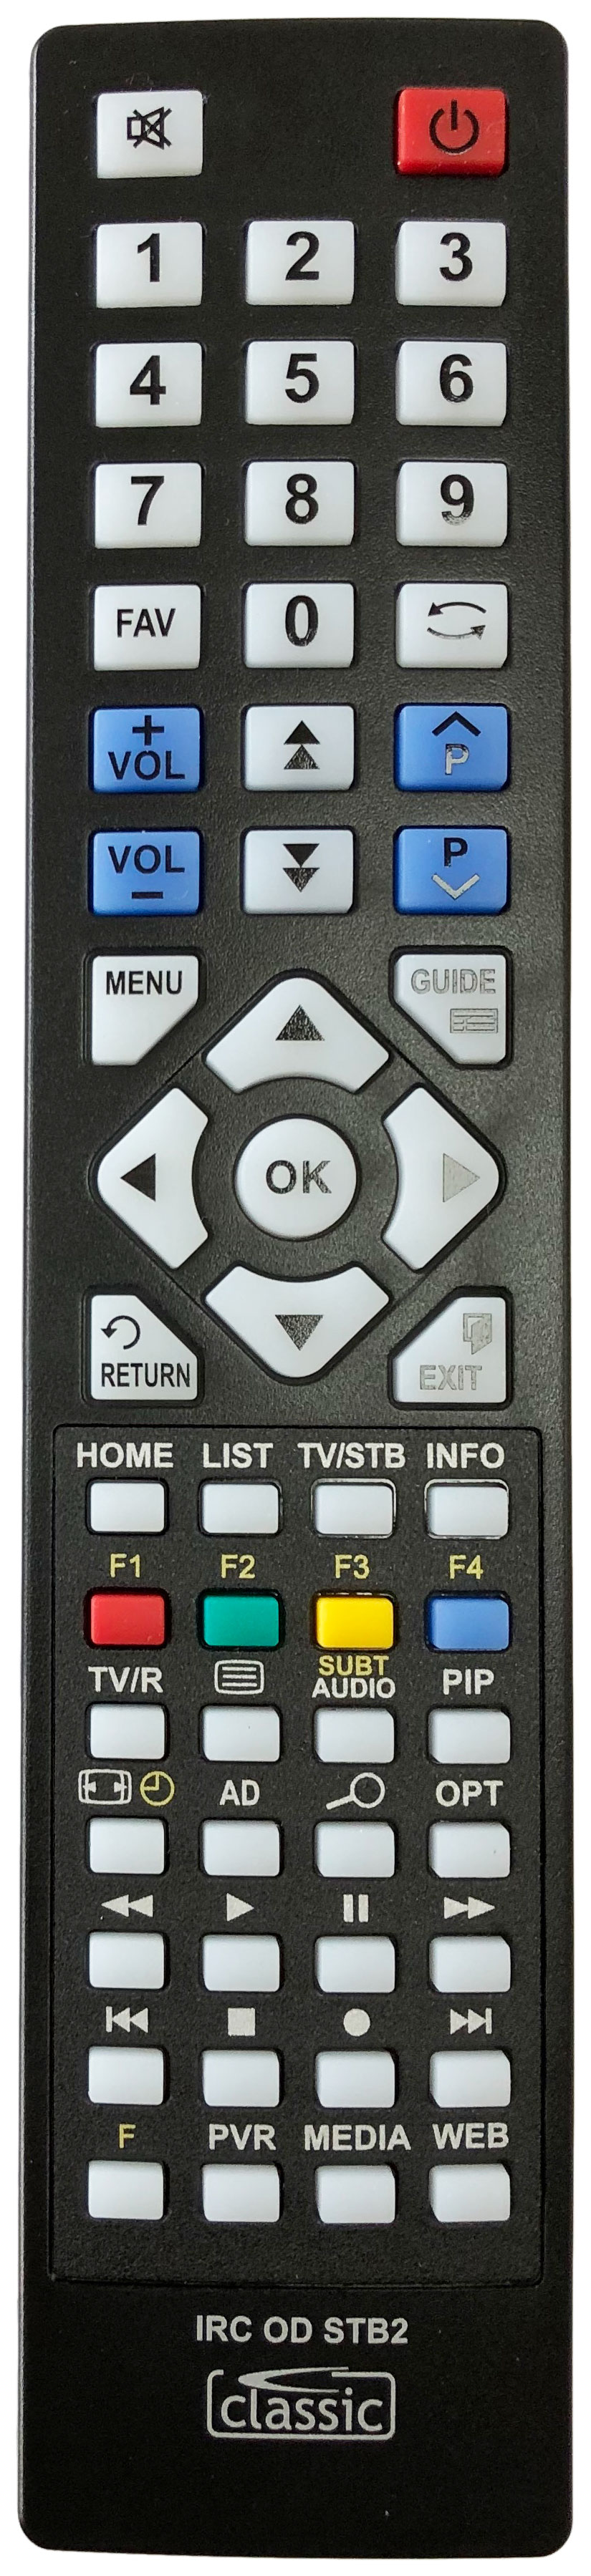 Finlux 30073061 Remote Control Alternative